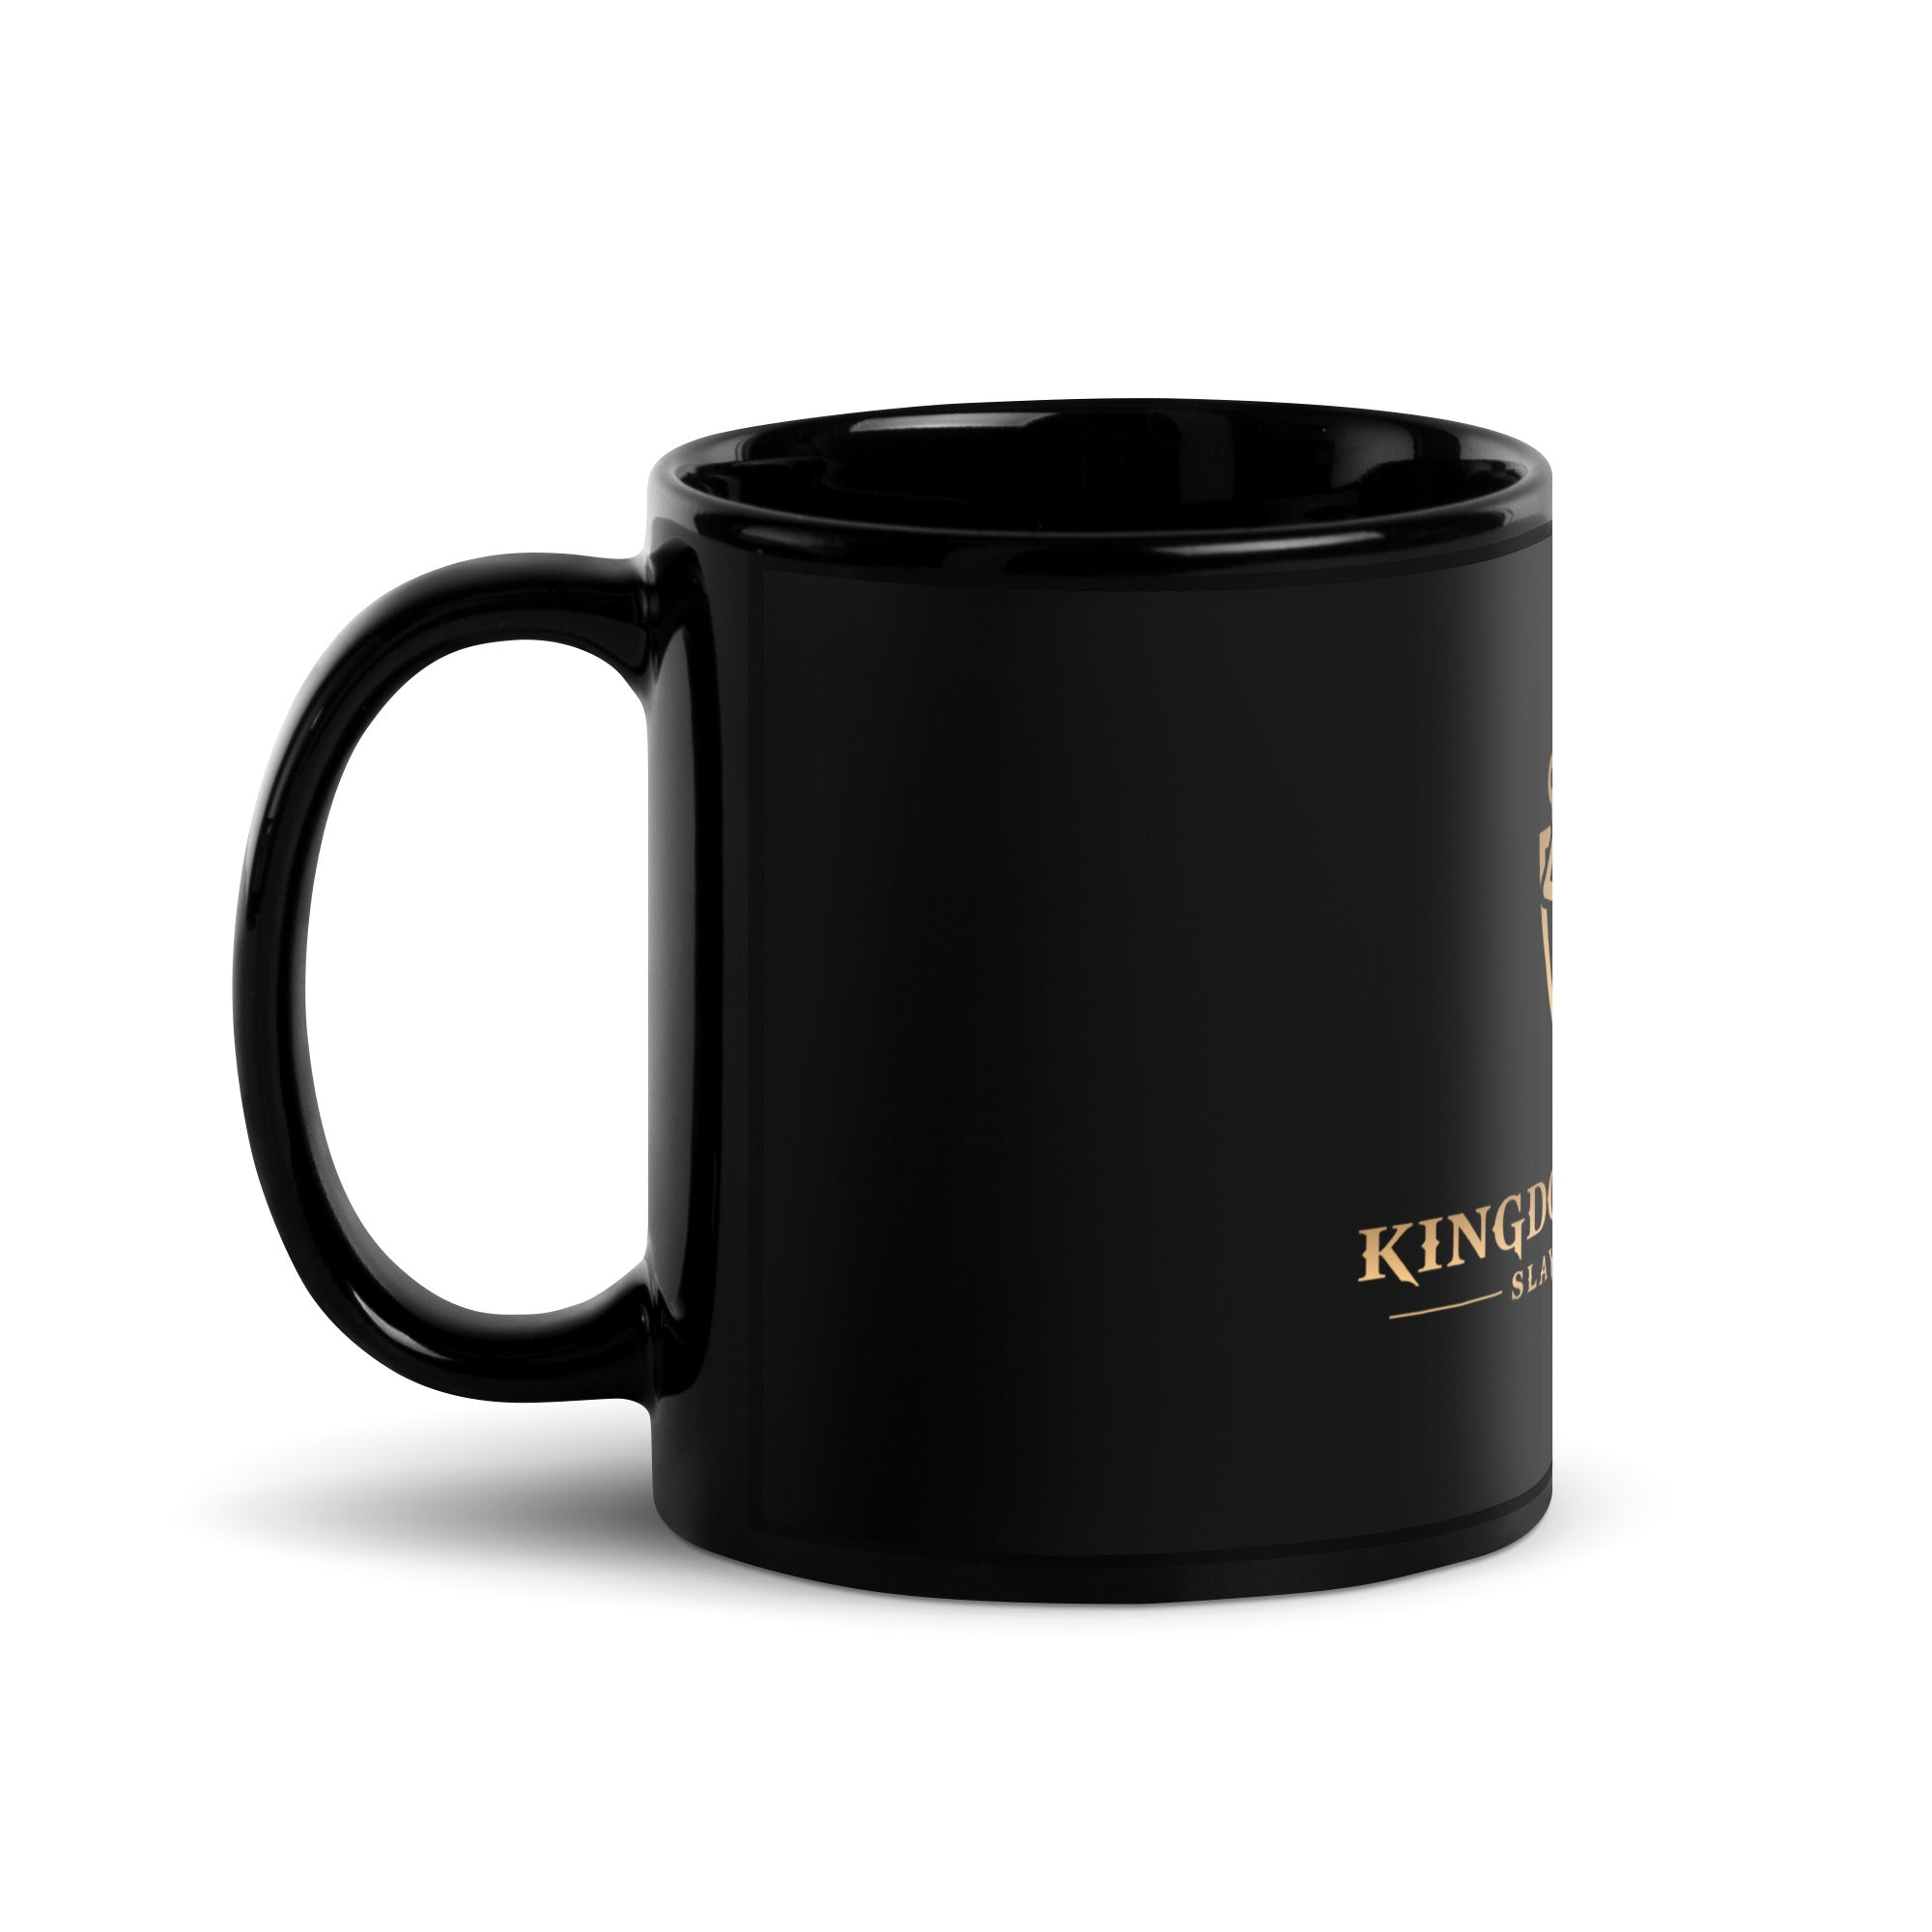 Black Glossy Mug - kingdom athlete s